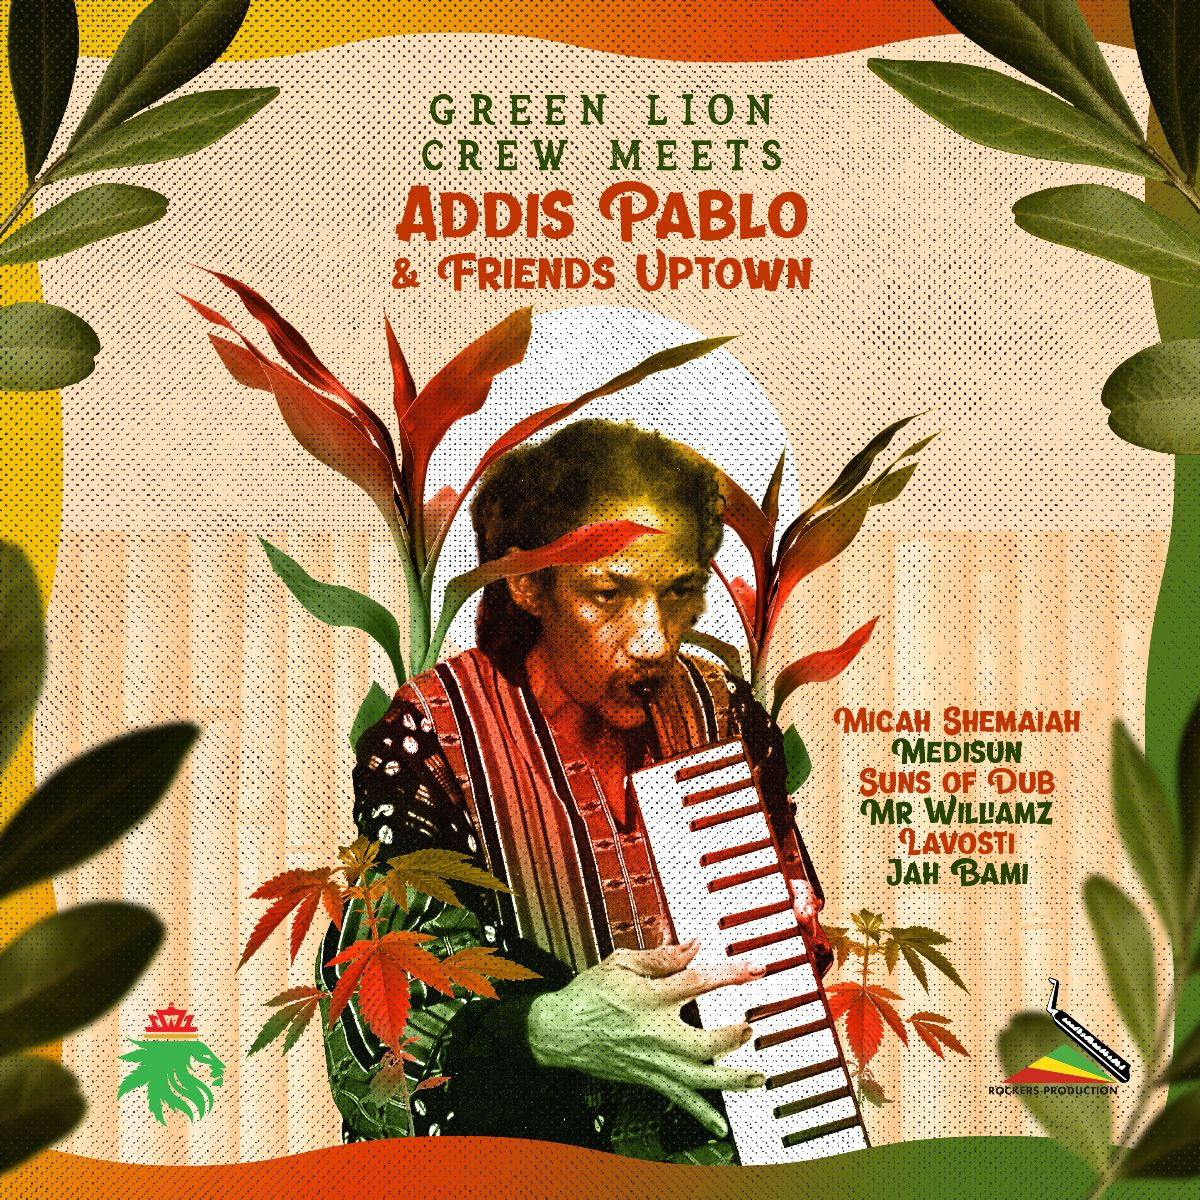 Green Lion Crew Meets Addis Pablo